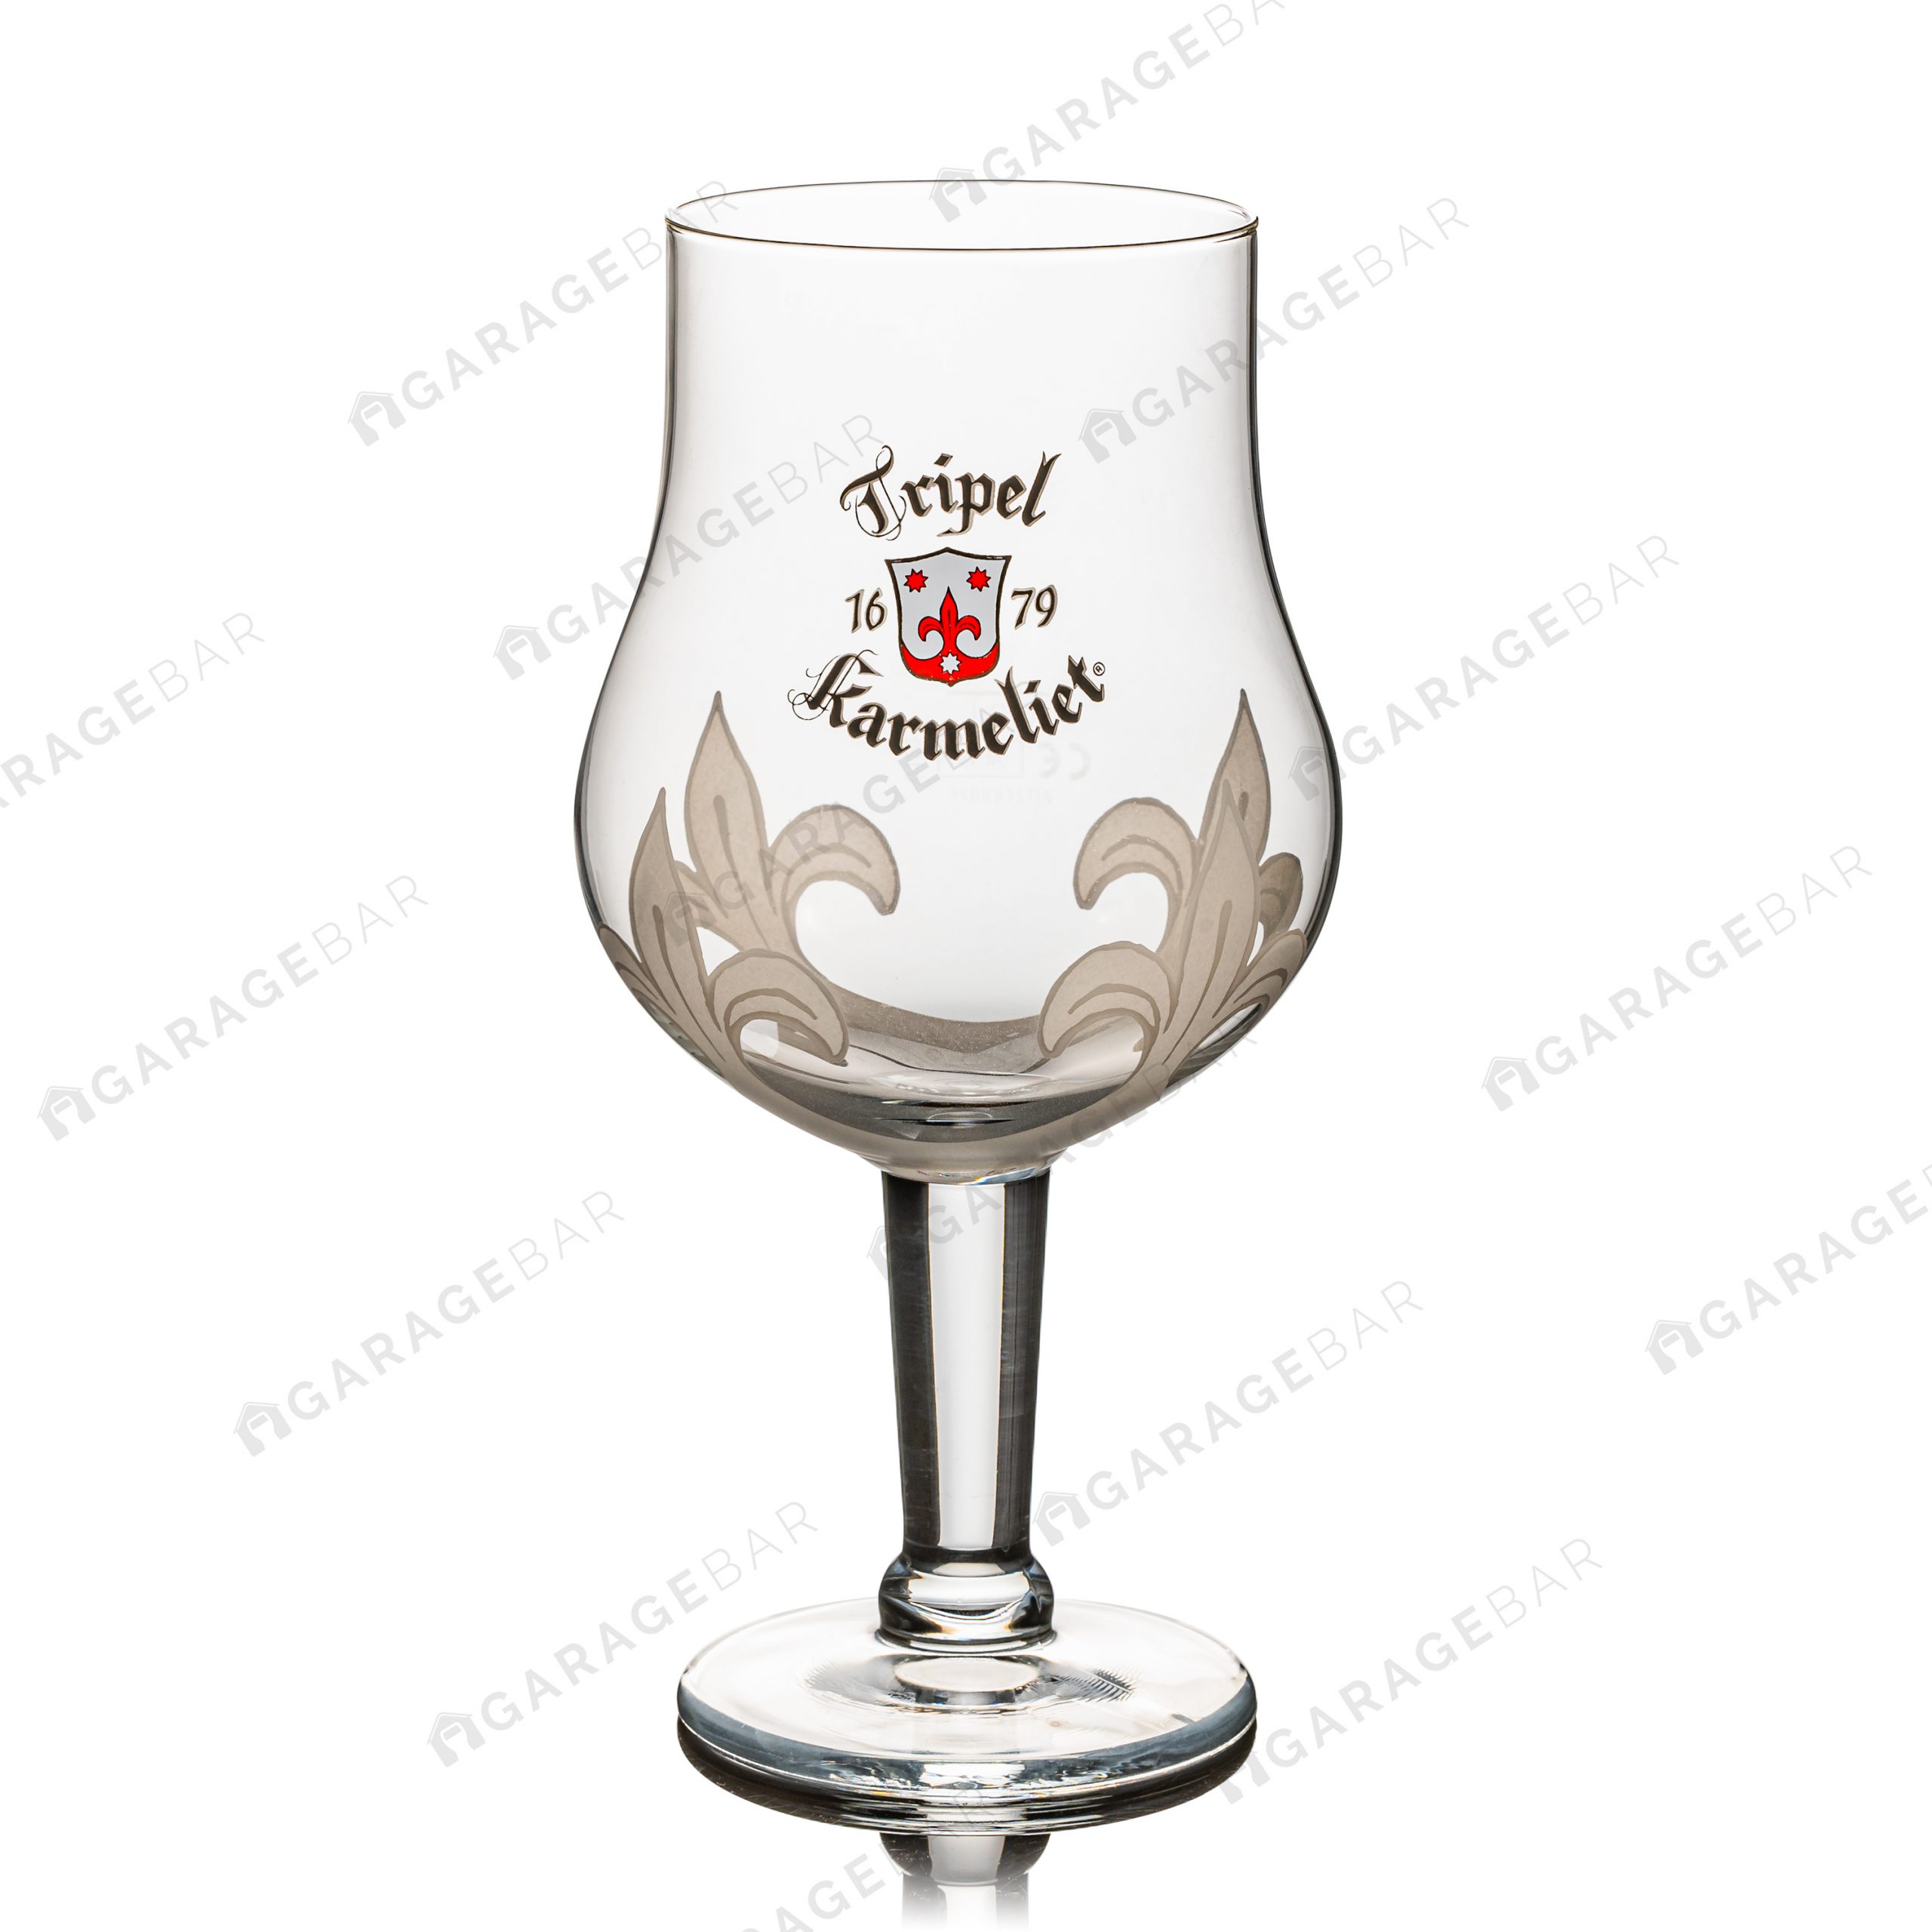 Tripel Karmeliet Beer Glass